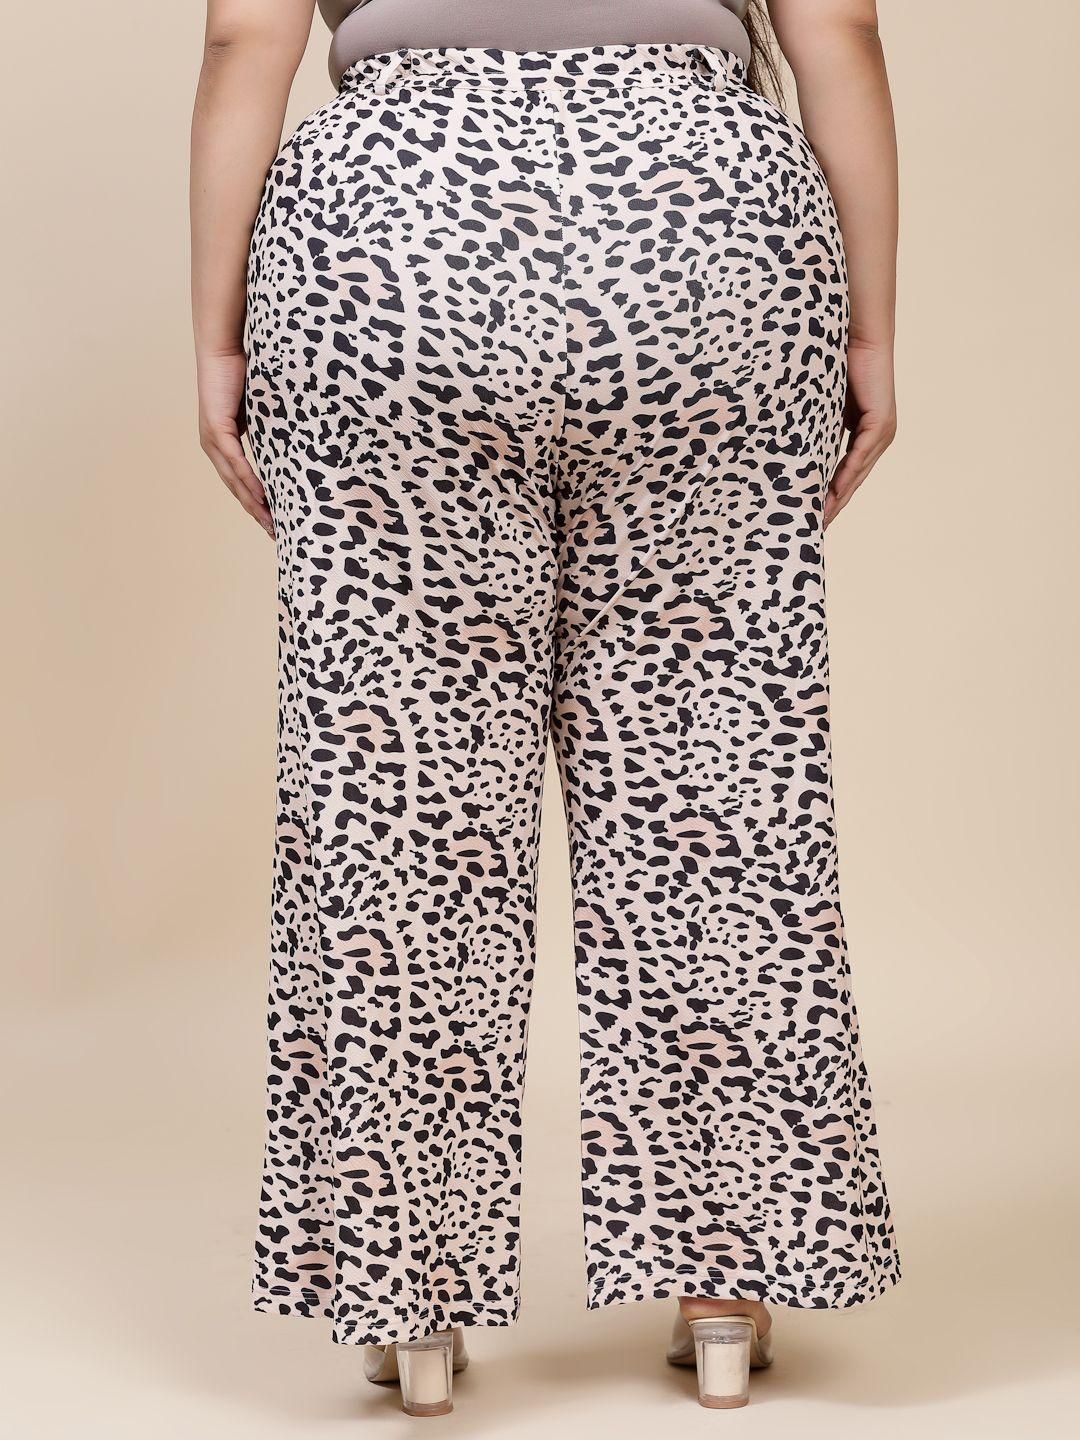 Flambeur Women's Plus Size Casual Animal Print Trouser